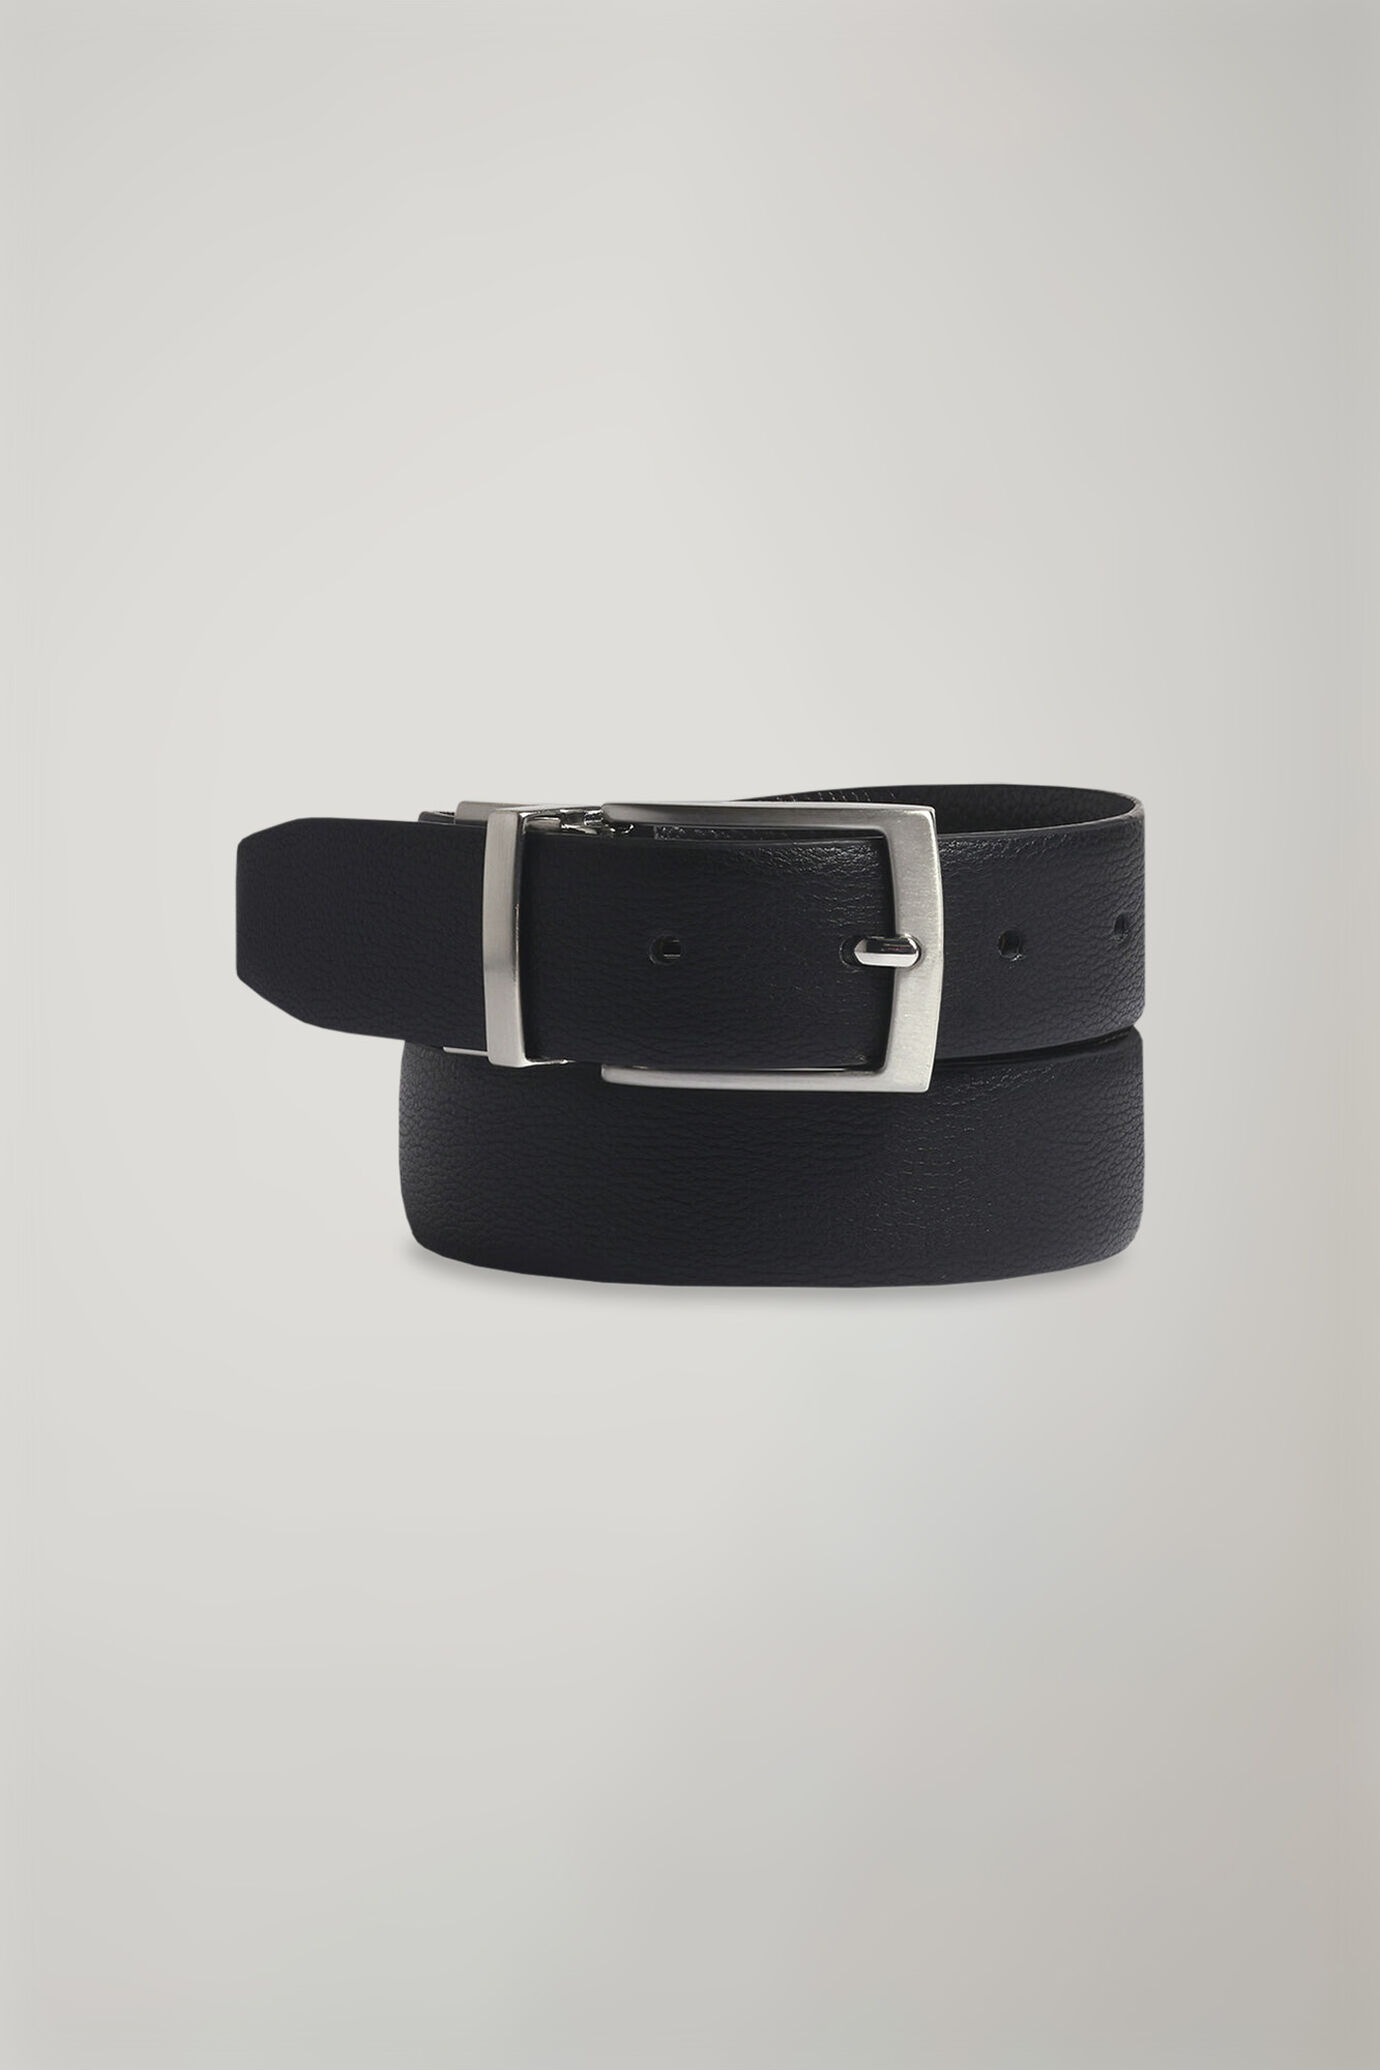 Men’s classic belt 100% leather